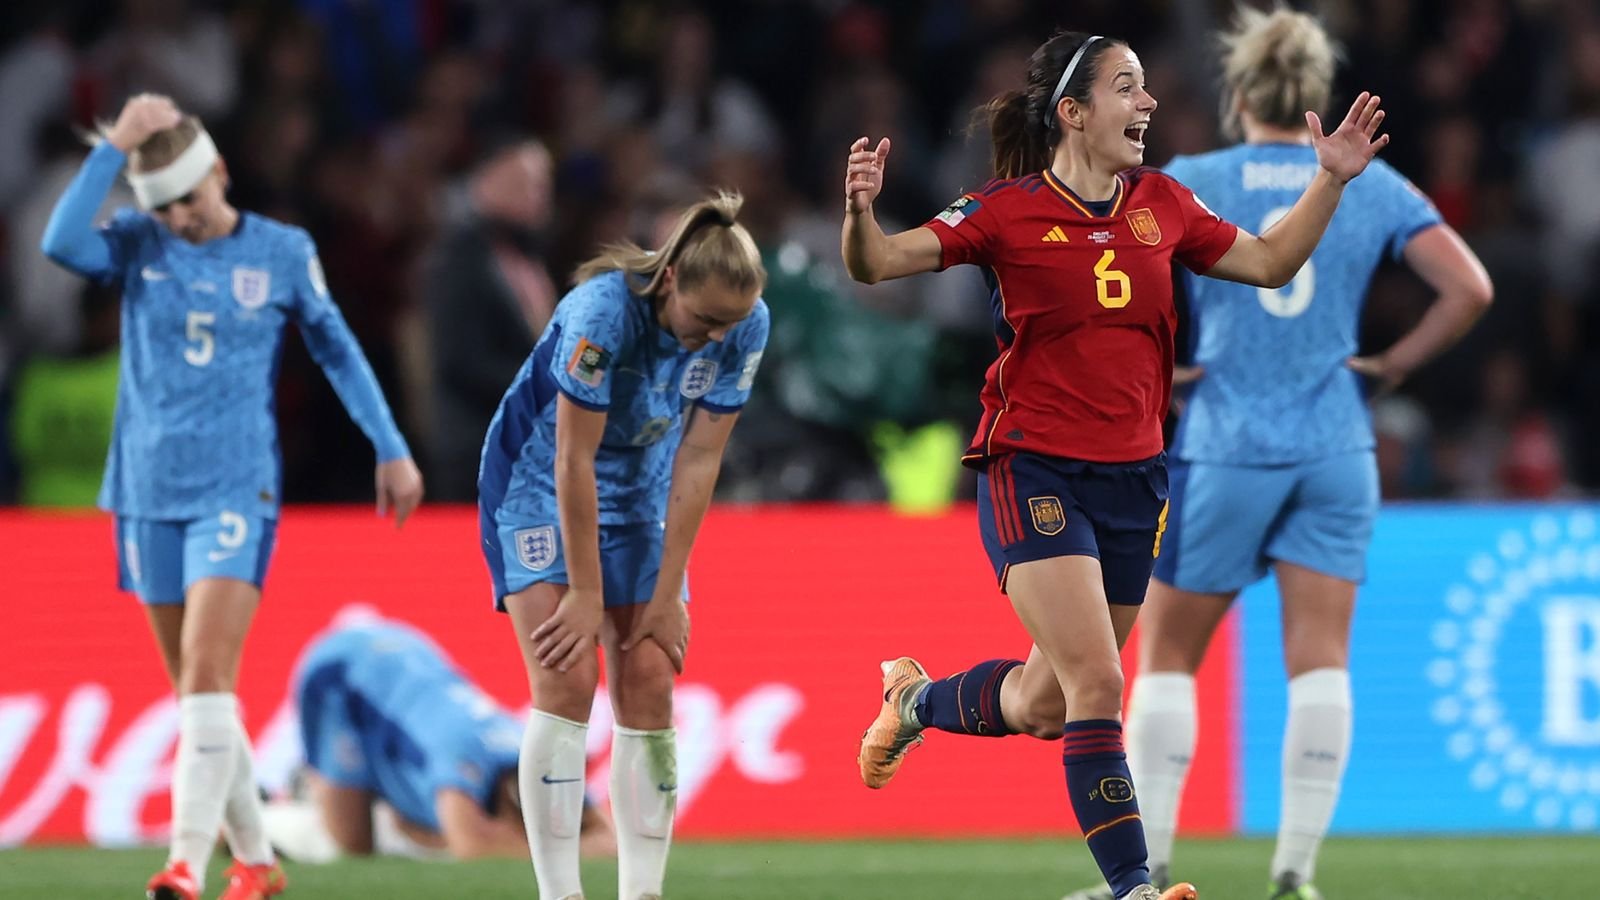 Spain 1-0 England: Slick European style and brilliant Aitana Bonmati - how Jorge Vilda's side won the World Cup